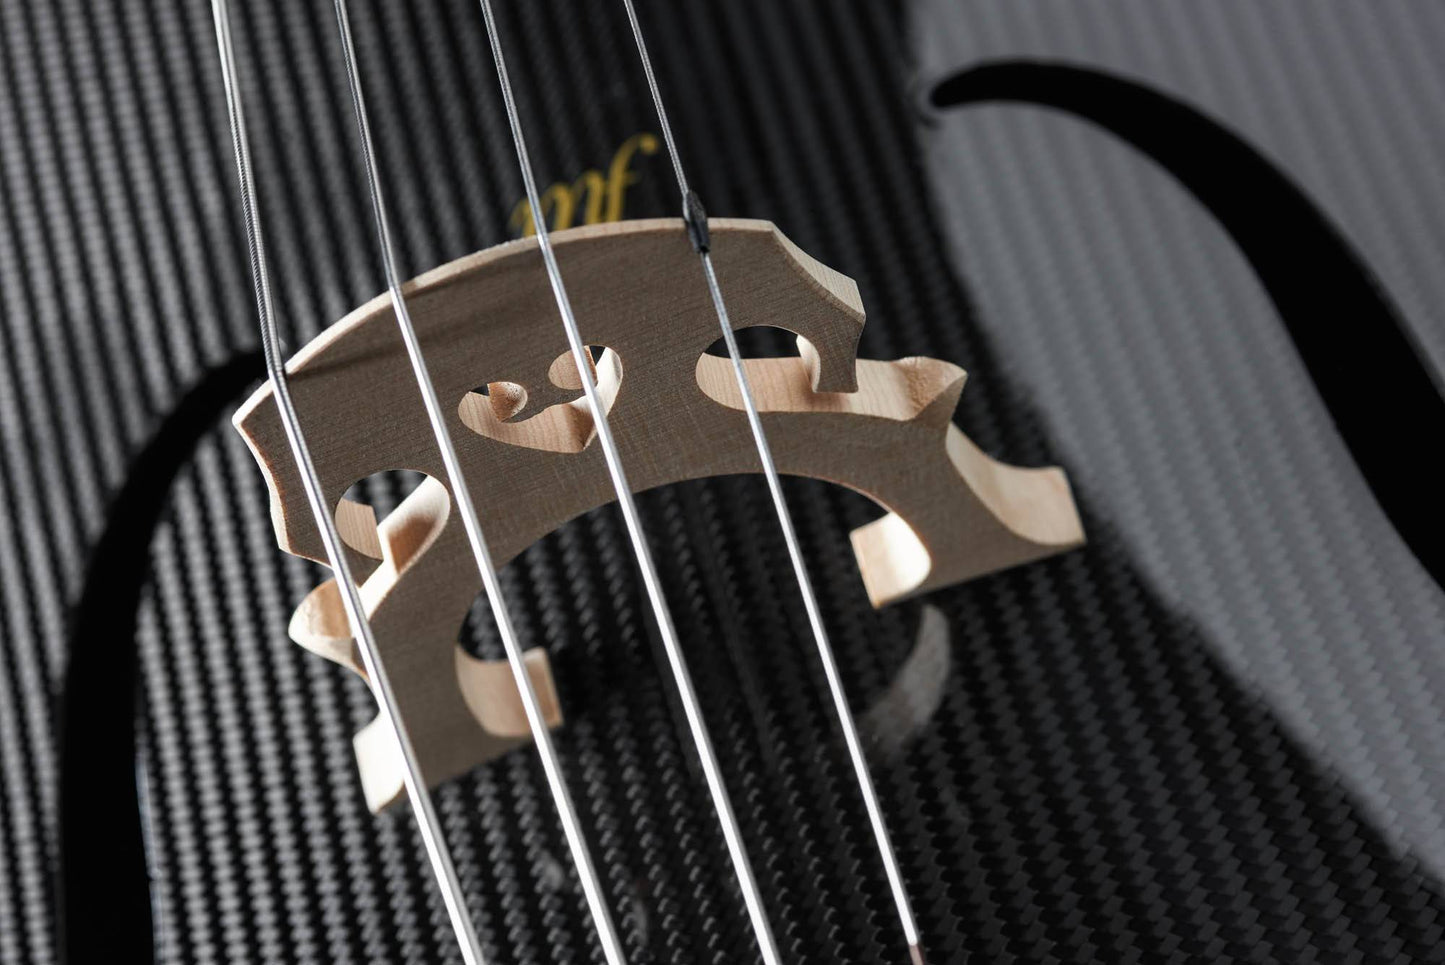 Carbon cello "Hybrid Line"